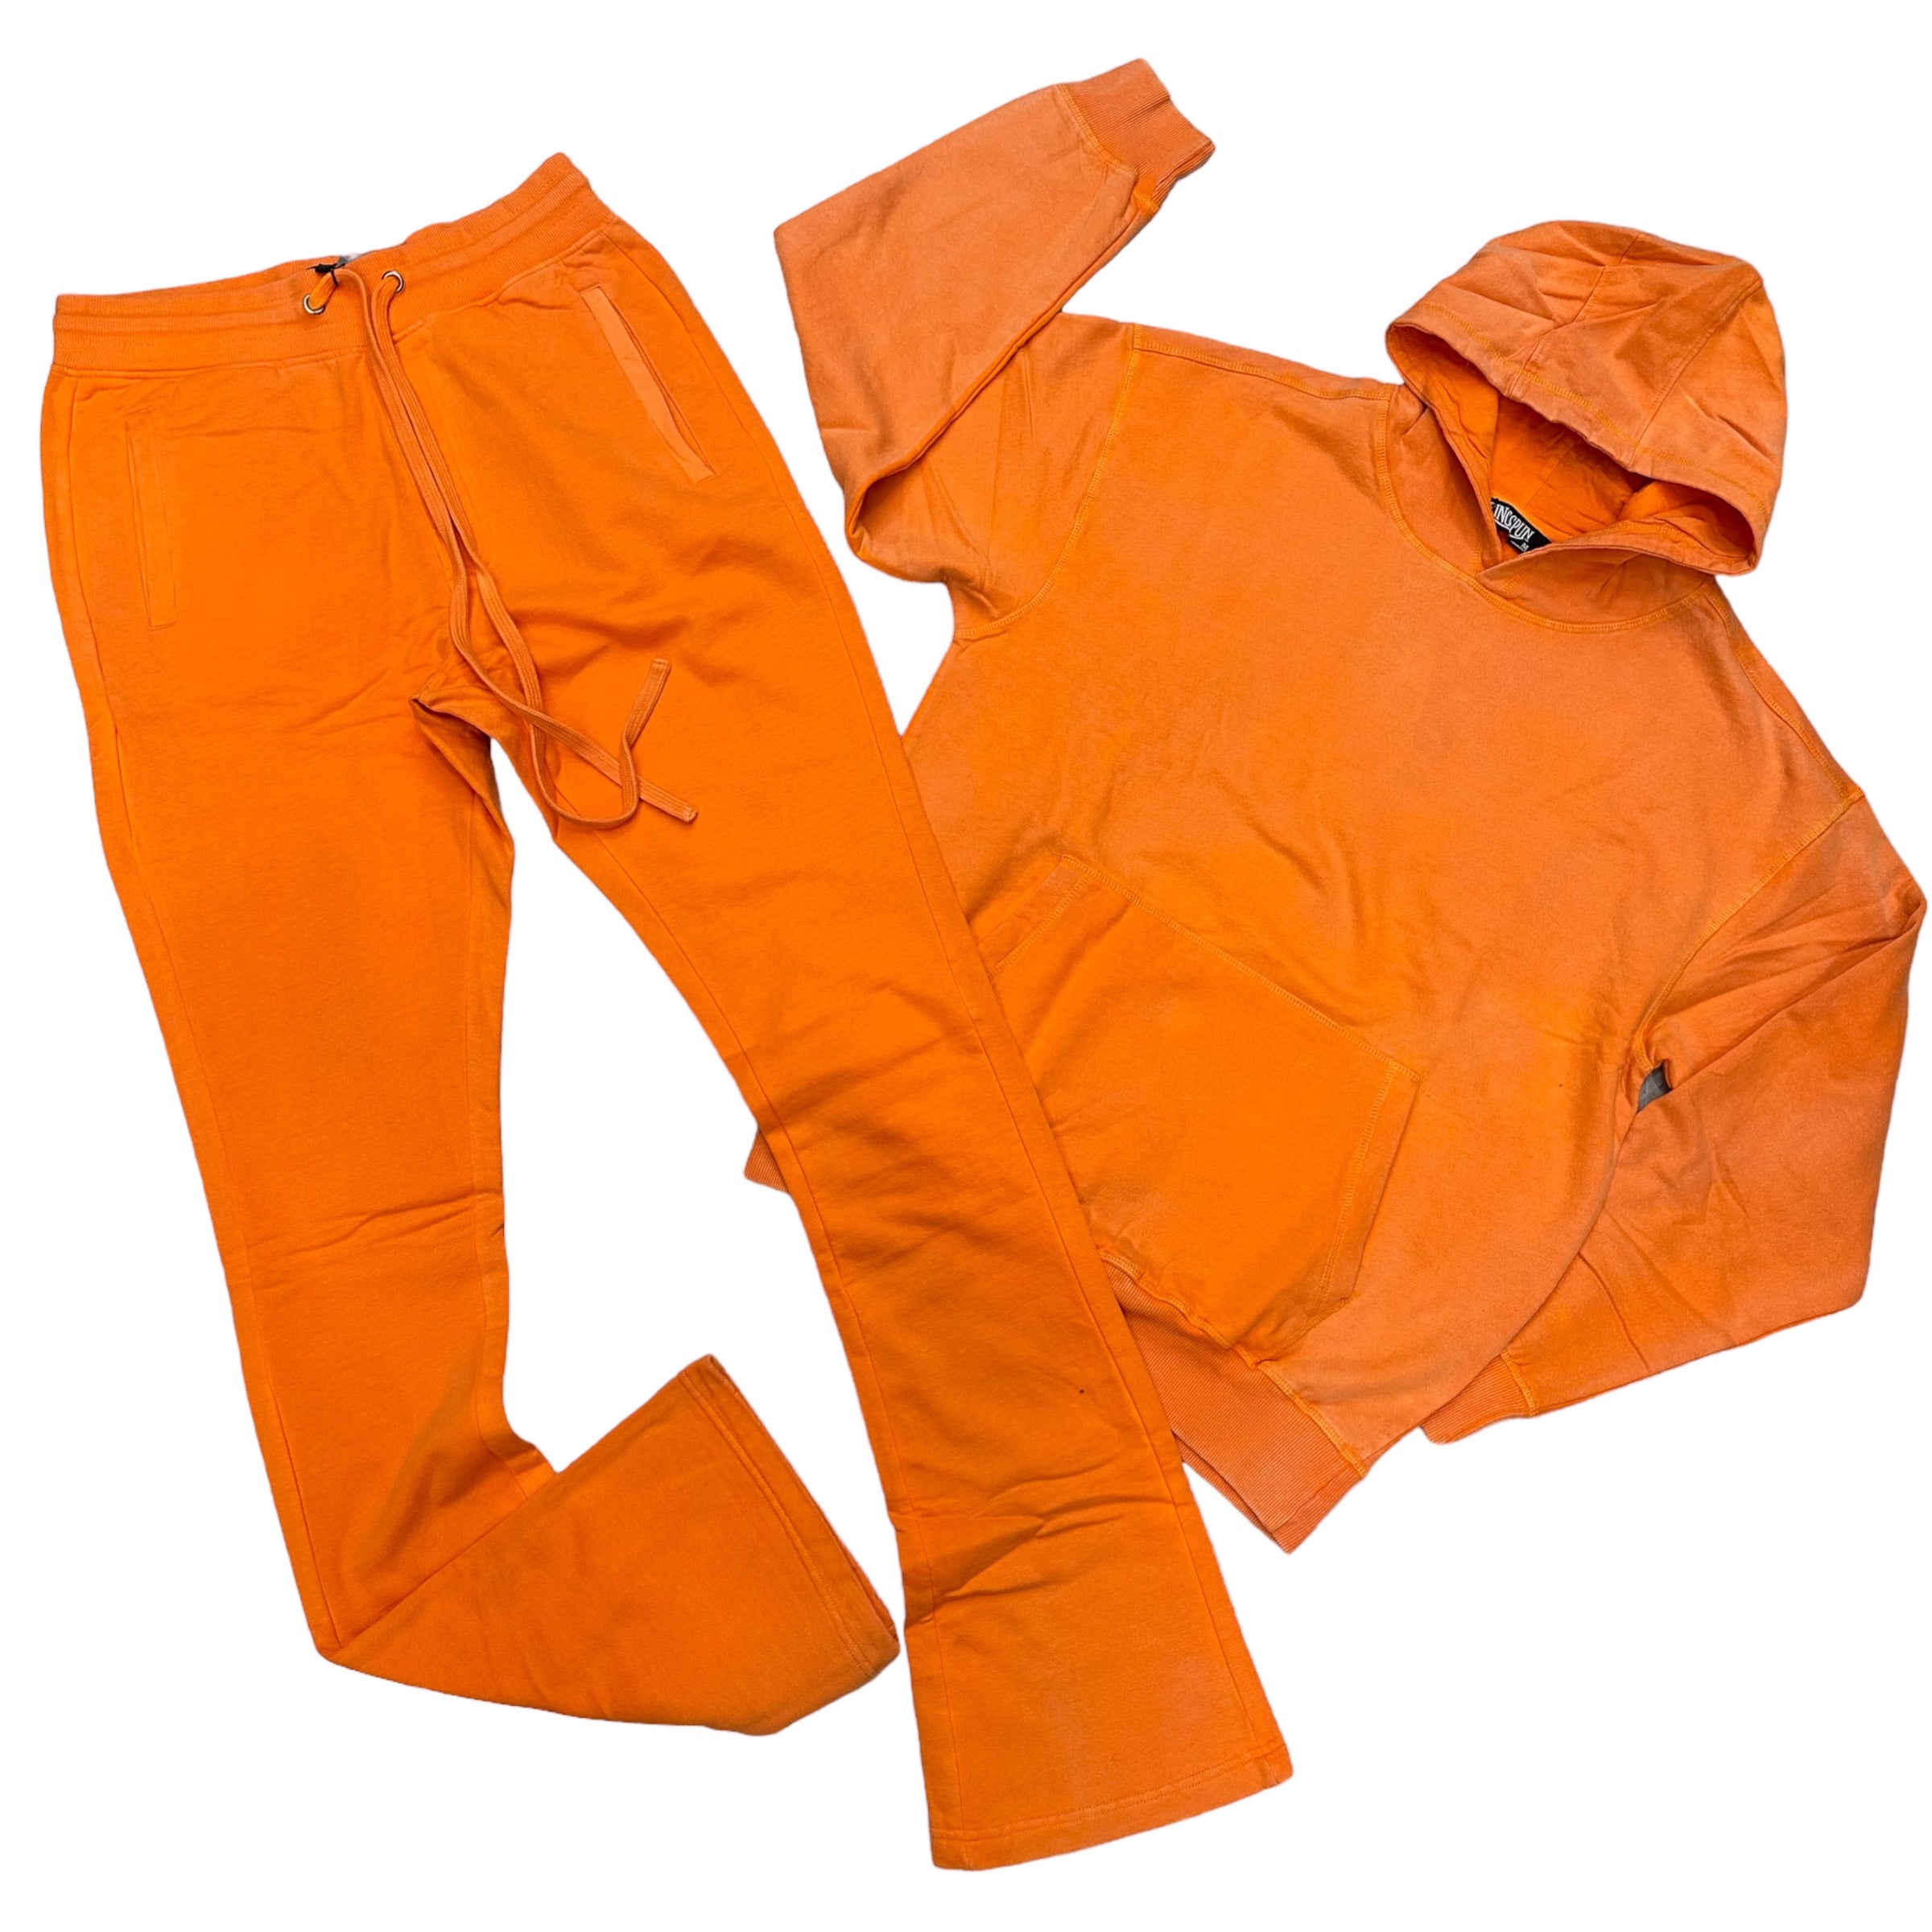 Rs Acid washed Stacked Pullover hoodie set orange 301 401